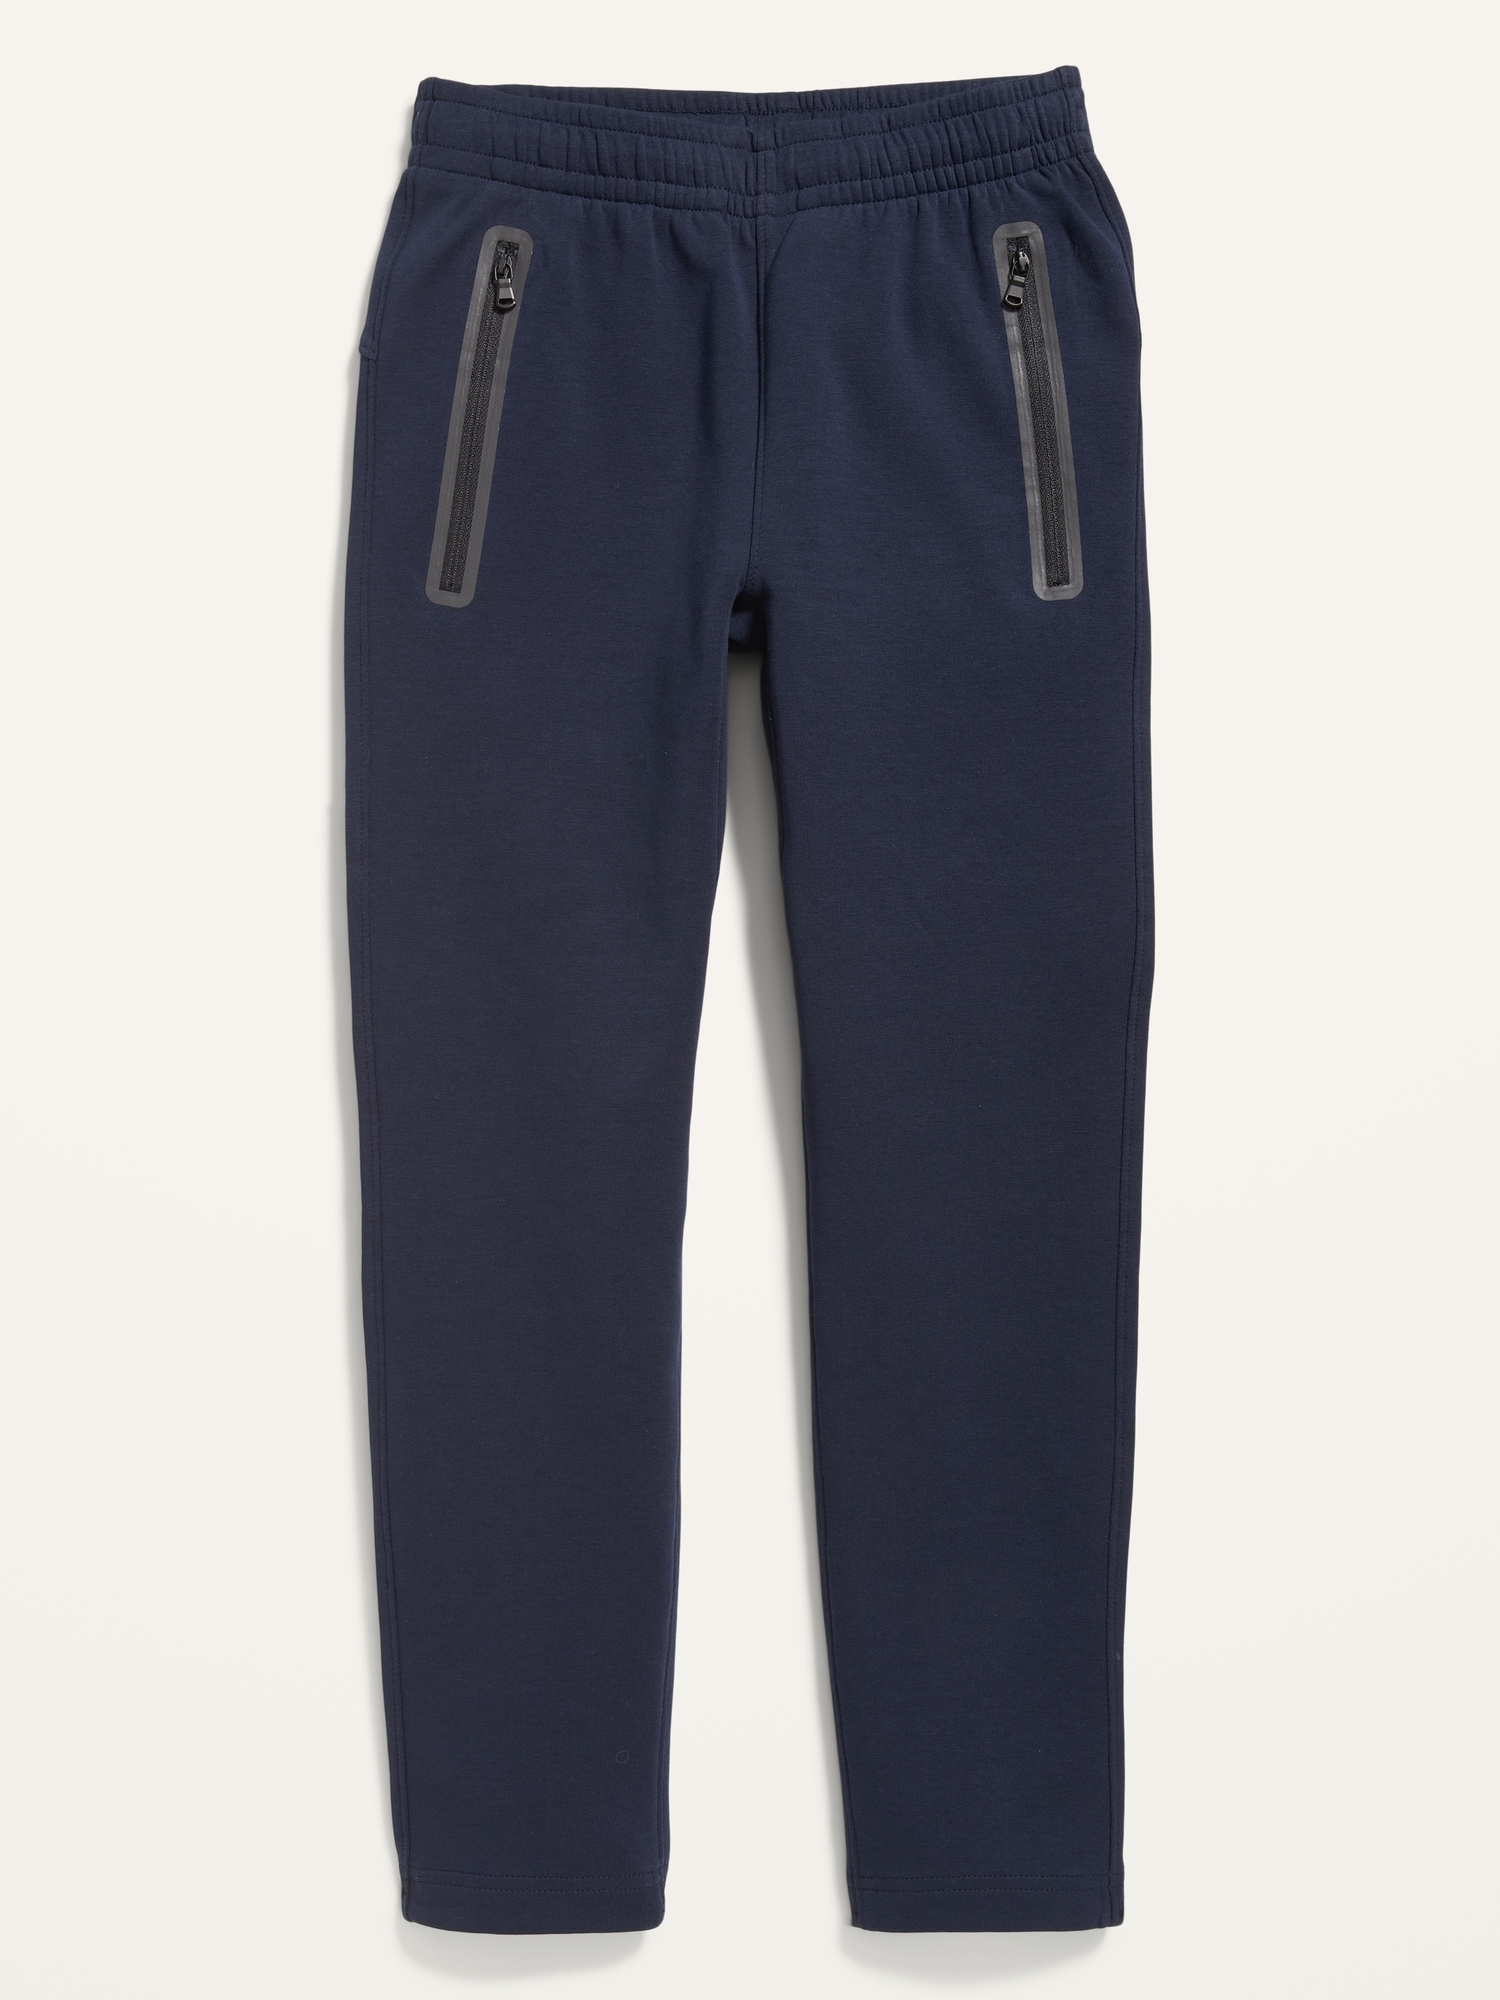 Old Navy Dynamic Fleece Go-Warm Tapered Sweatpants for Men